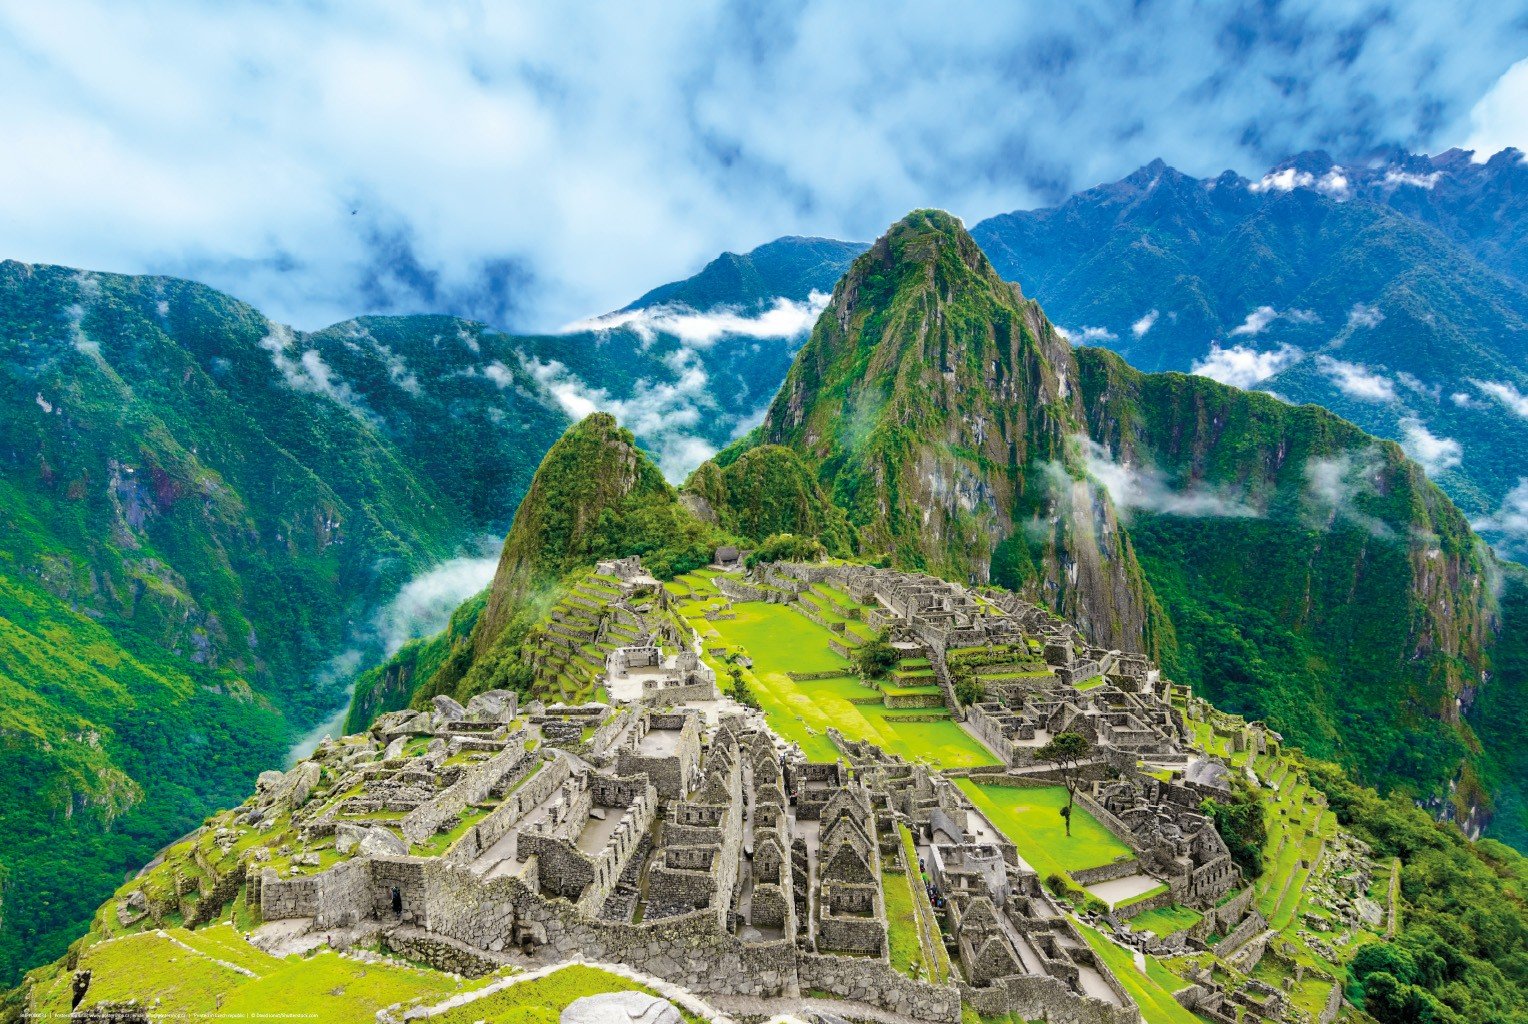 Poster: Machu Picchu